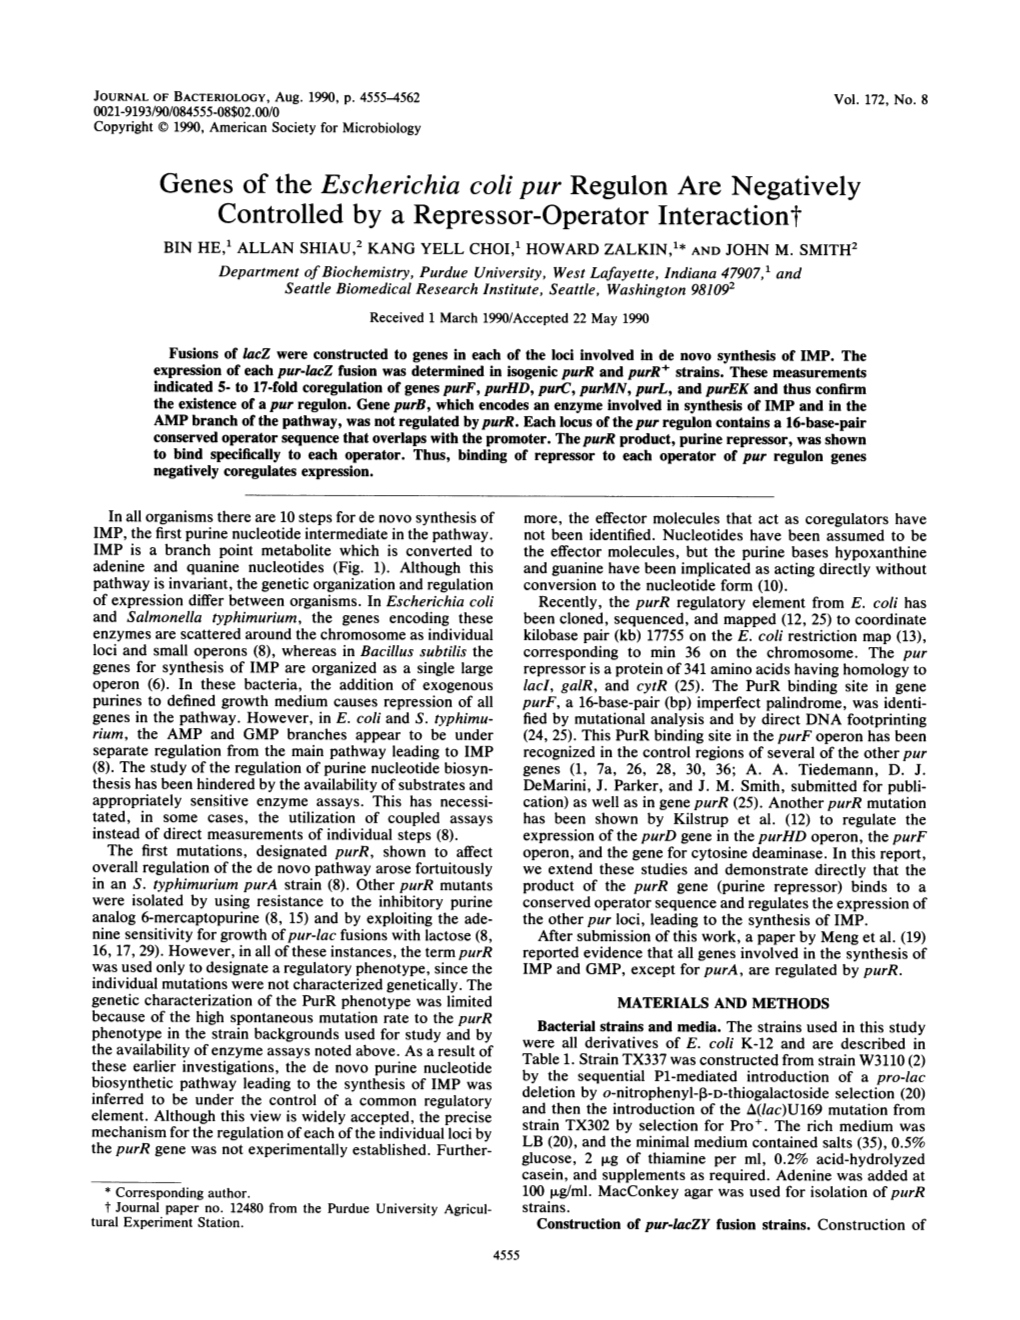 Genes of the Escherichia Coli Pur Regulon Are Negatively Controlled